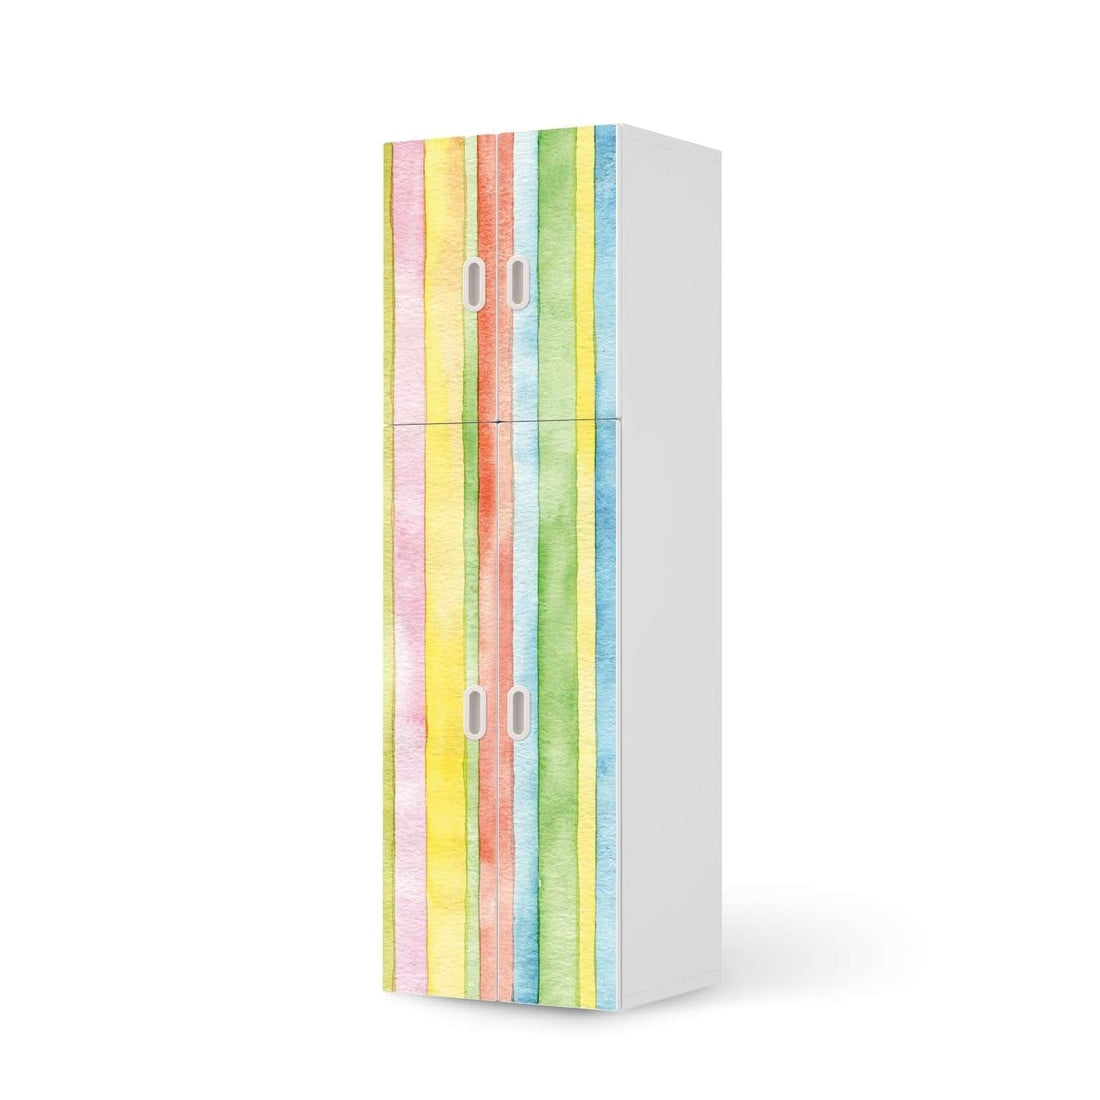 Selbstklebende Folie Watercolor Stripes - IKEA Stuva / Fritids kombiniert - 2 große Türen und 2 kleine Türen  - weiss